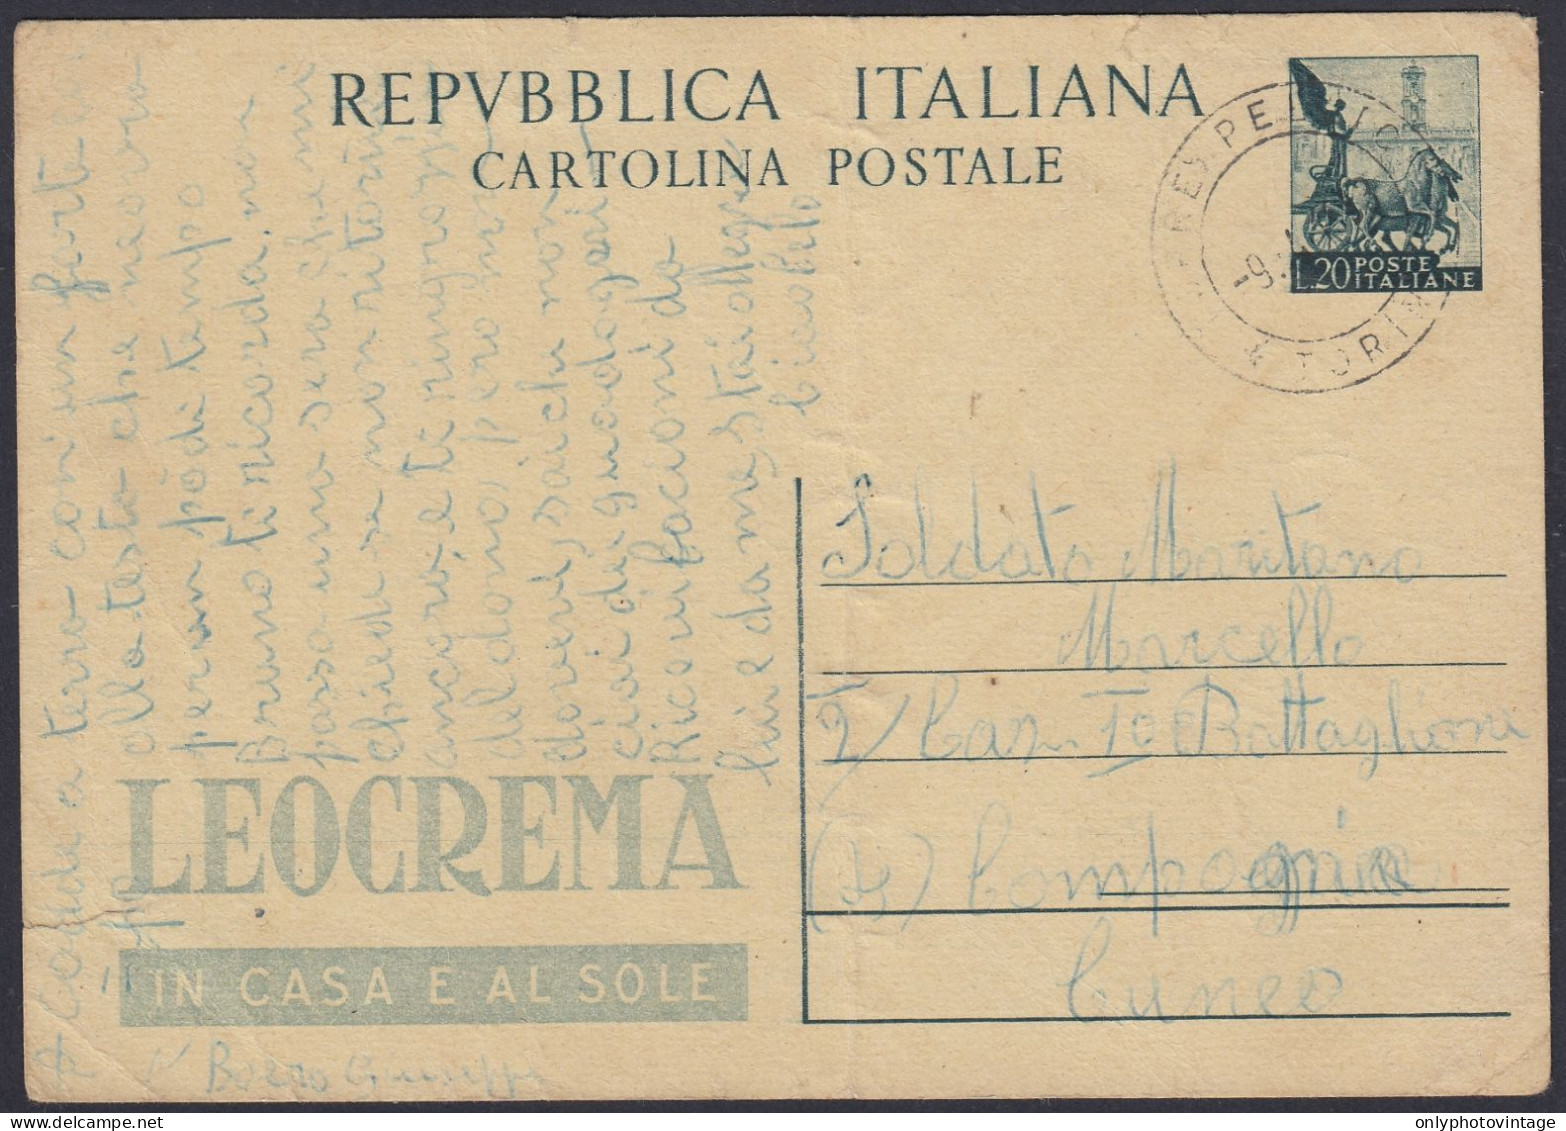 Intero Postale 1958 Da Torre Pellice (TO) Per Cuneo, Cartolina Pubblicitaria, Leocrema In Casa E Al Sole - Publicité